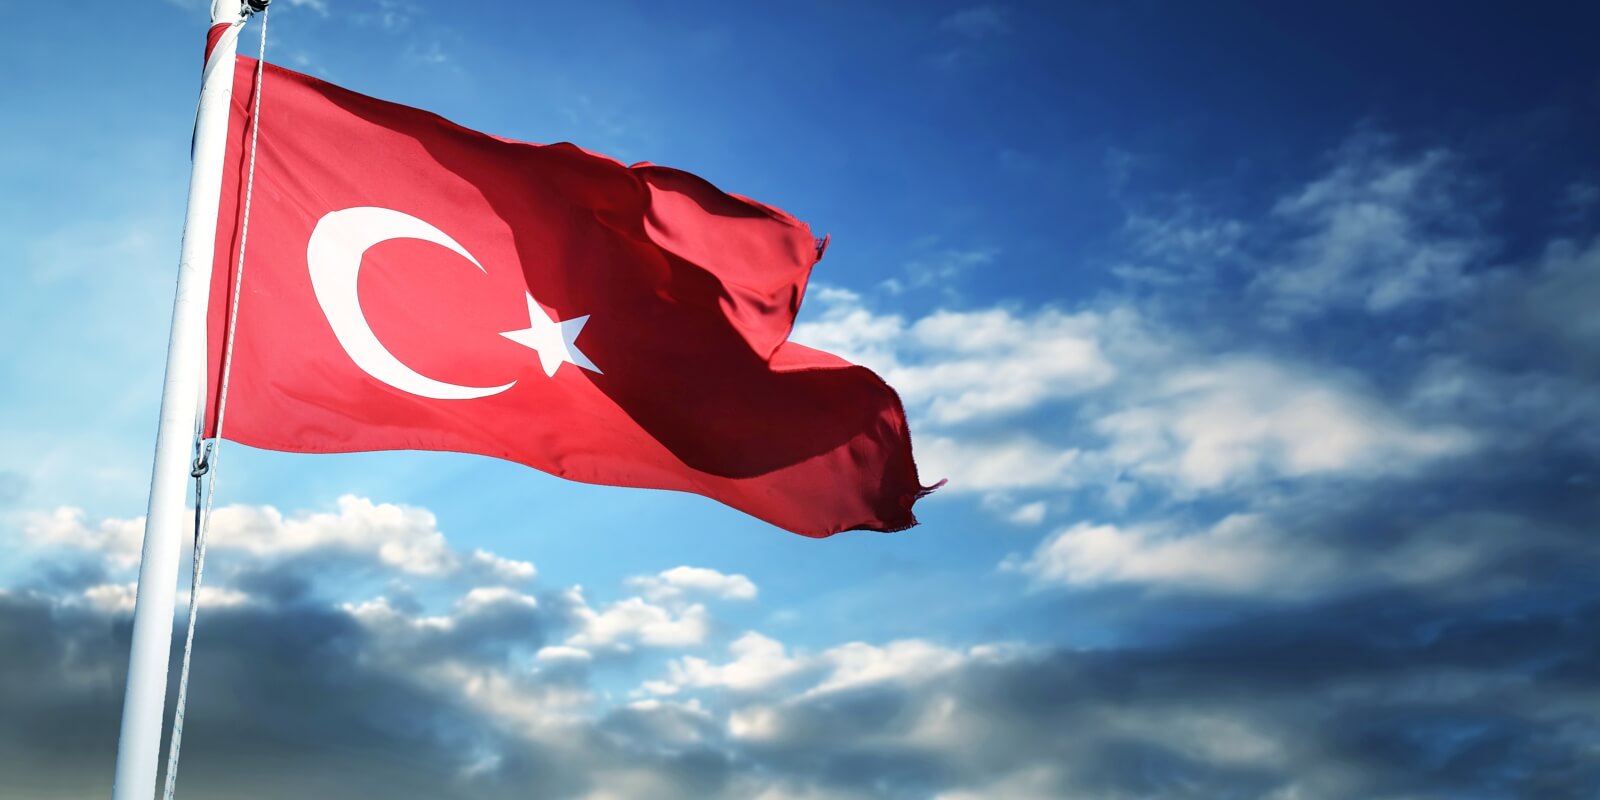 Vlies Tapete XXL Poster Fototapete Türkei Flagge Fahne